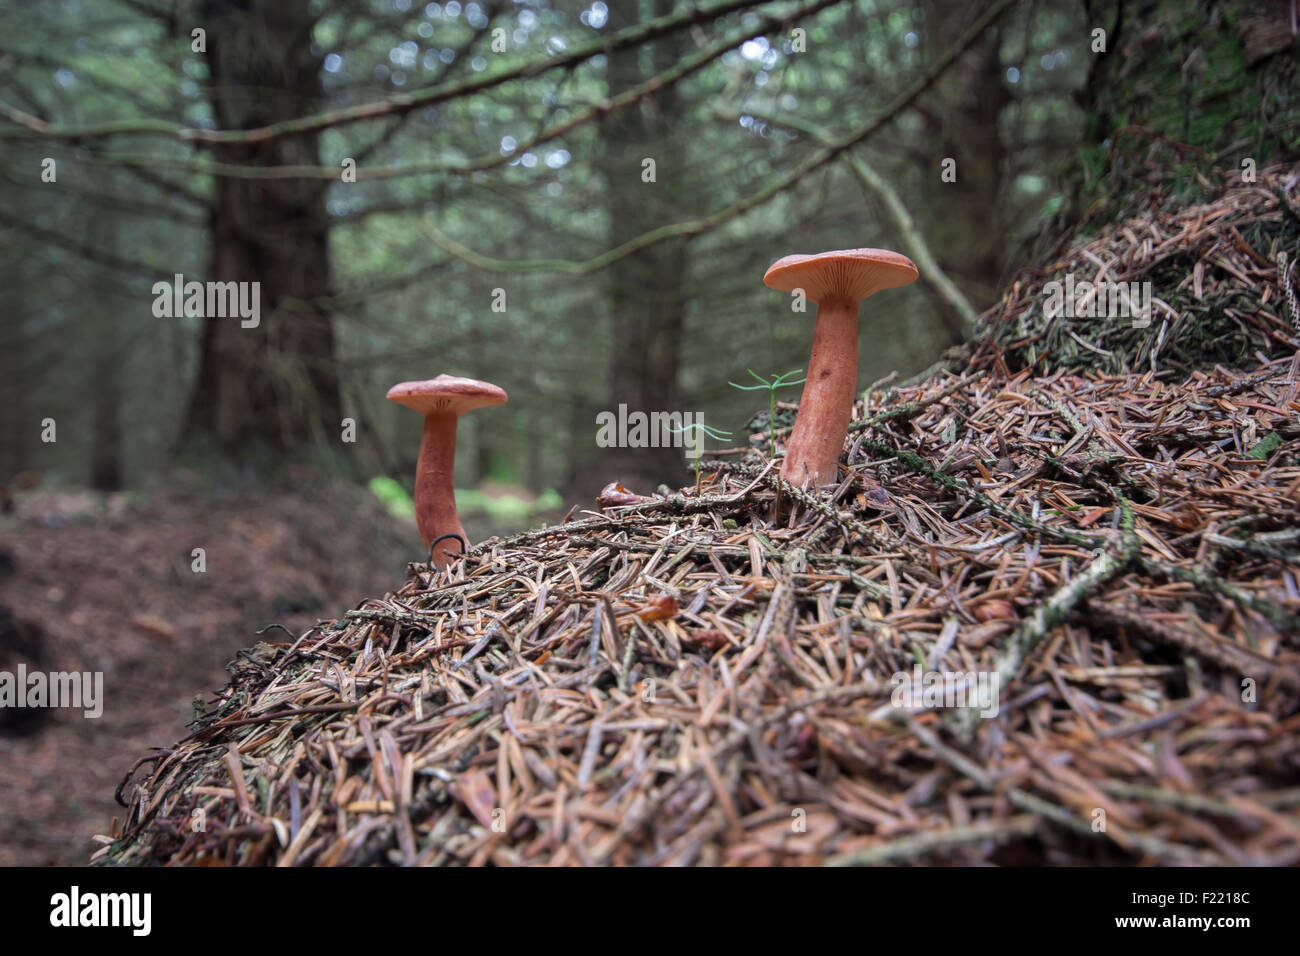 Mycena mushrooms in West Yorkshire pine woods Stock Photo